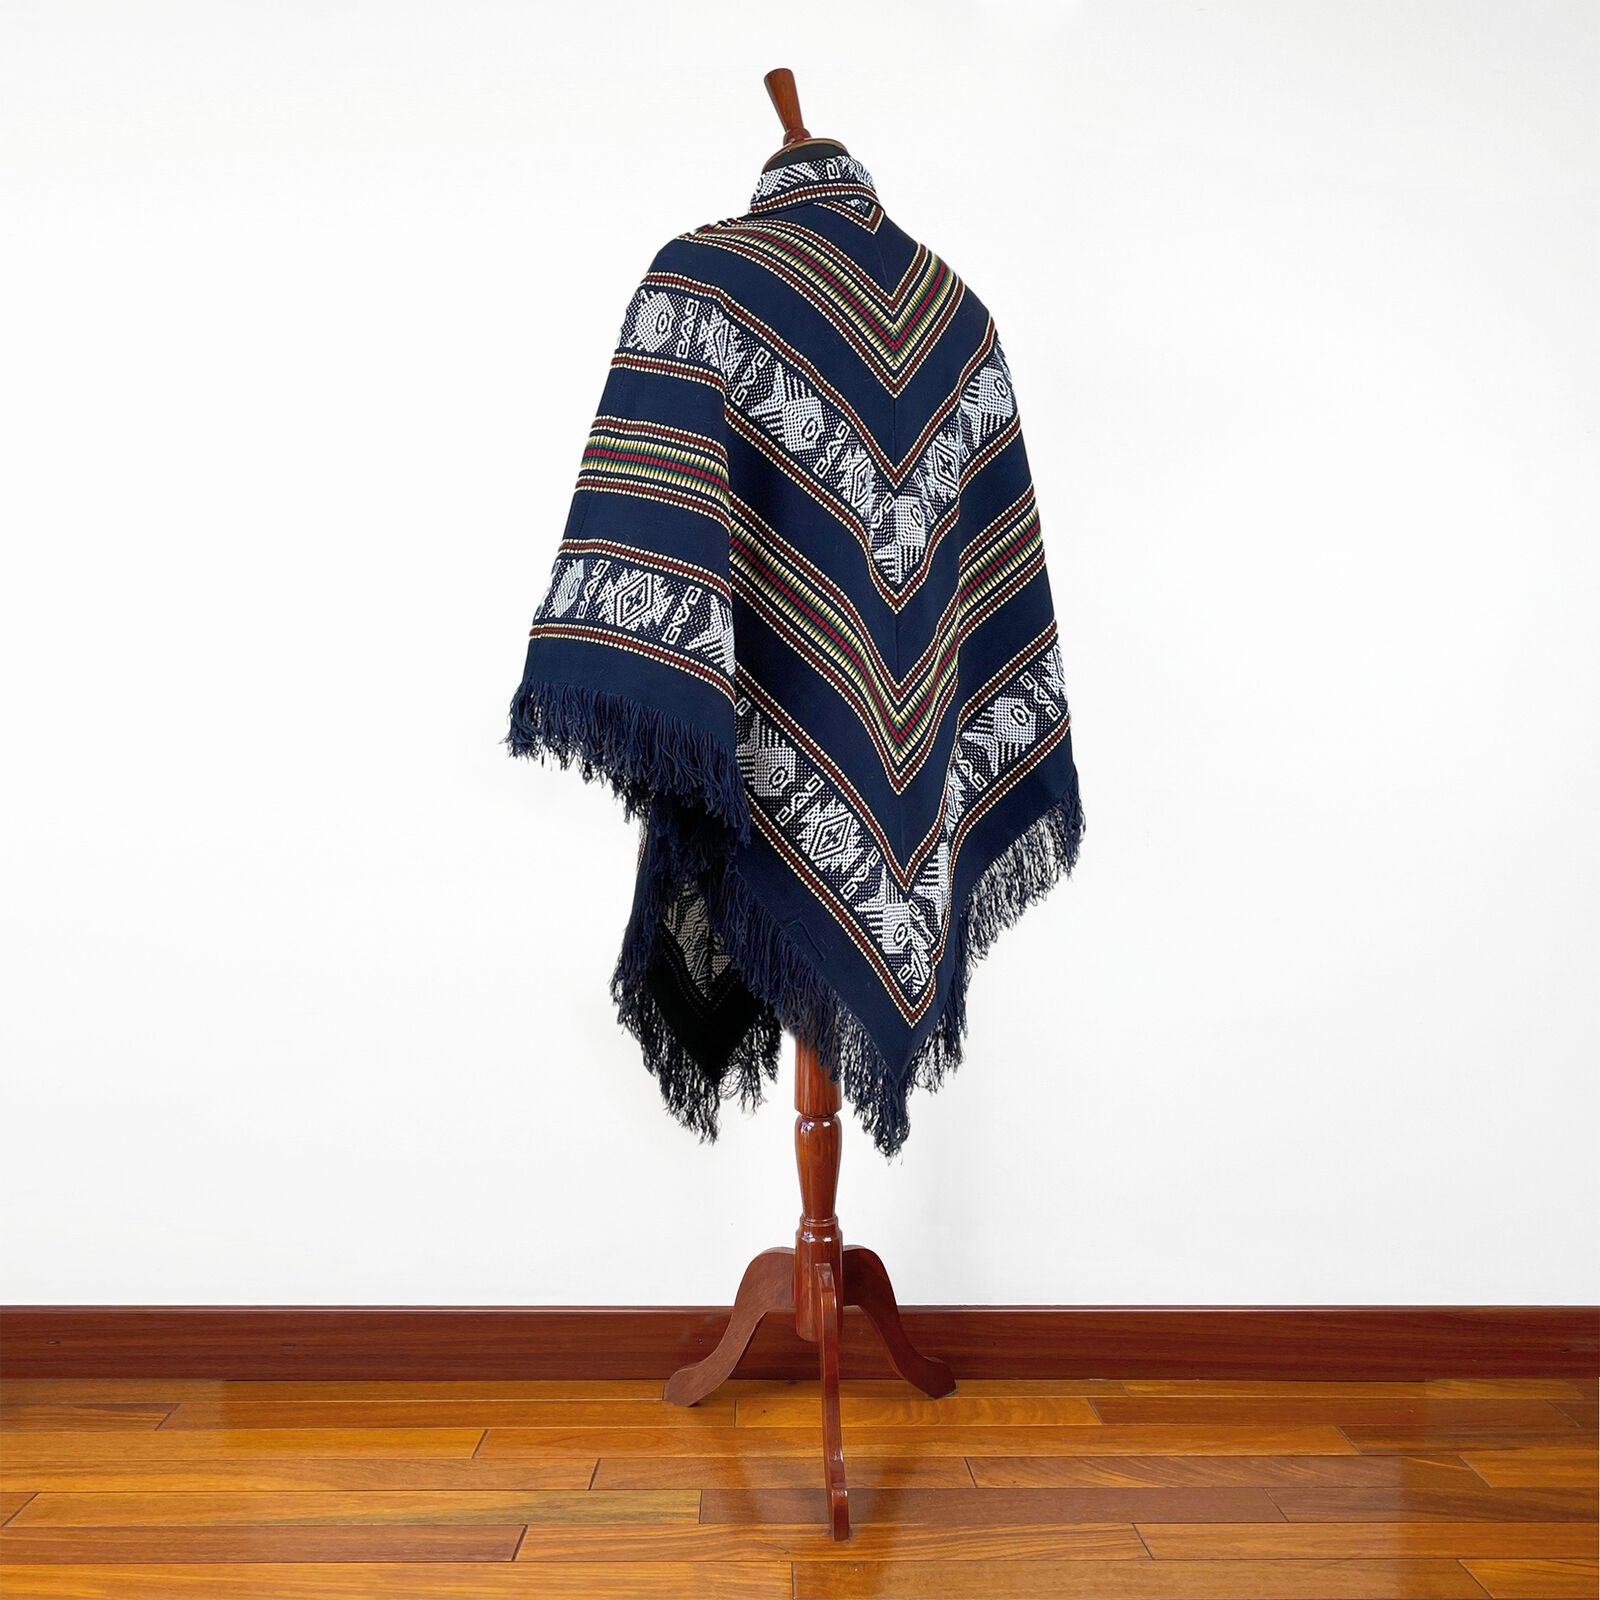 Nangaritza - Alpaca wool Serape Poncho with scarf - Piranha pattern - Navy Blue - Unisex